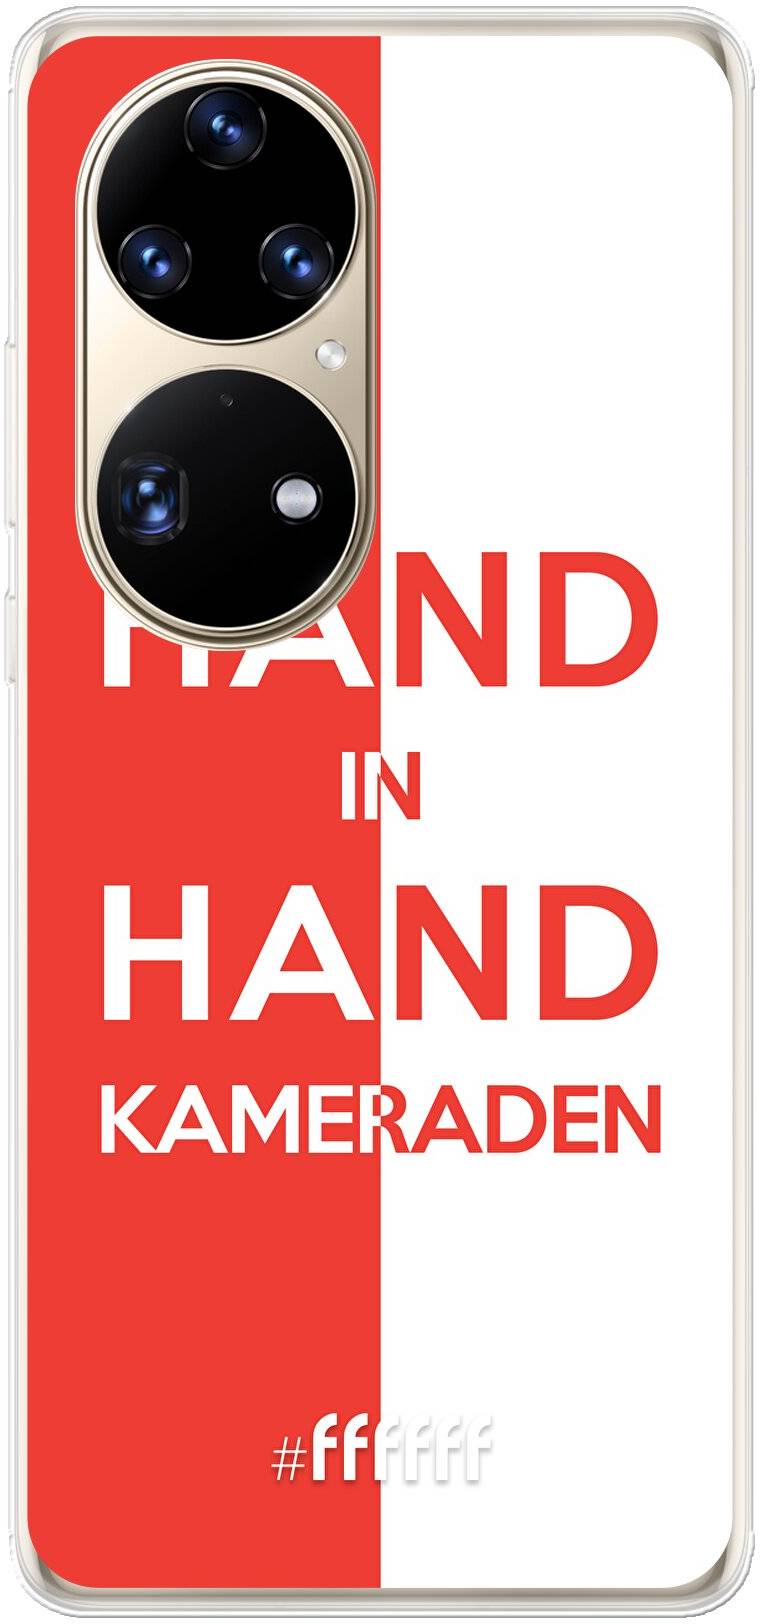 Feyenoord - Hand in hand, kameraden P50 Pro